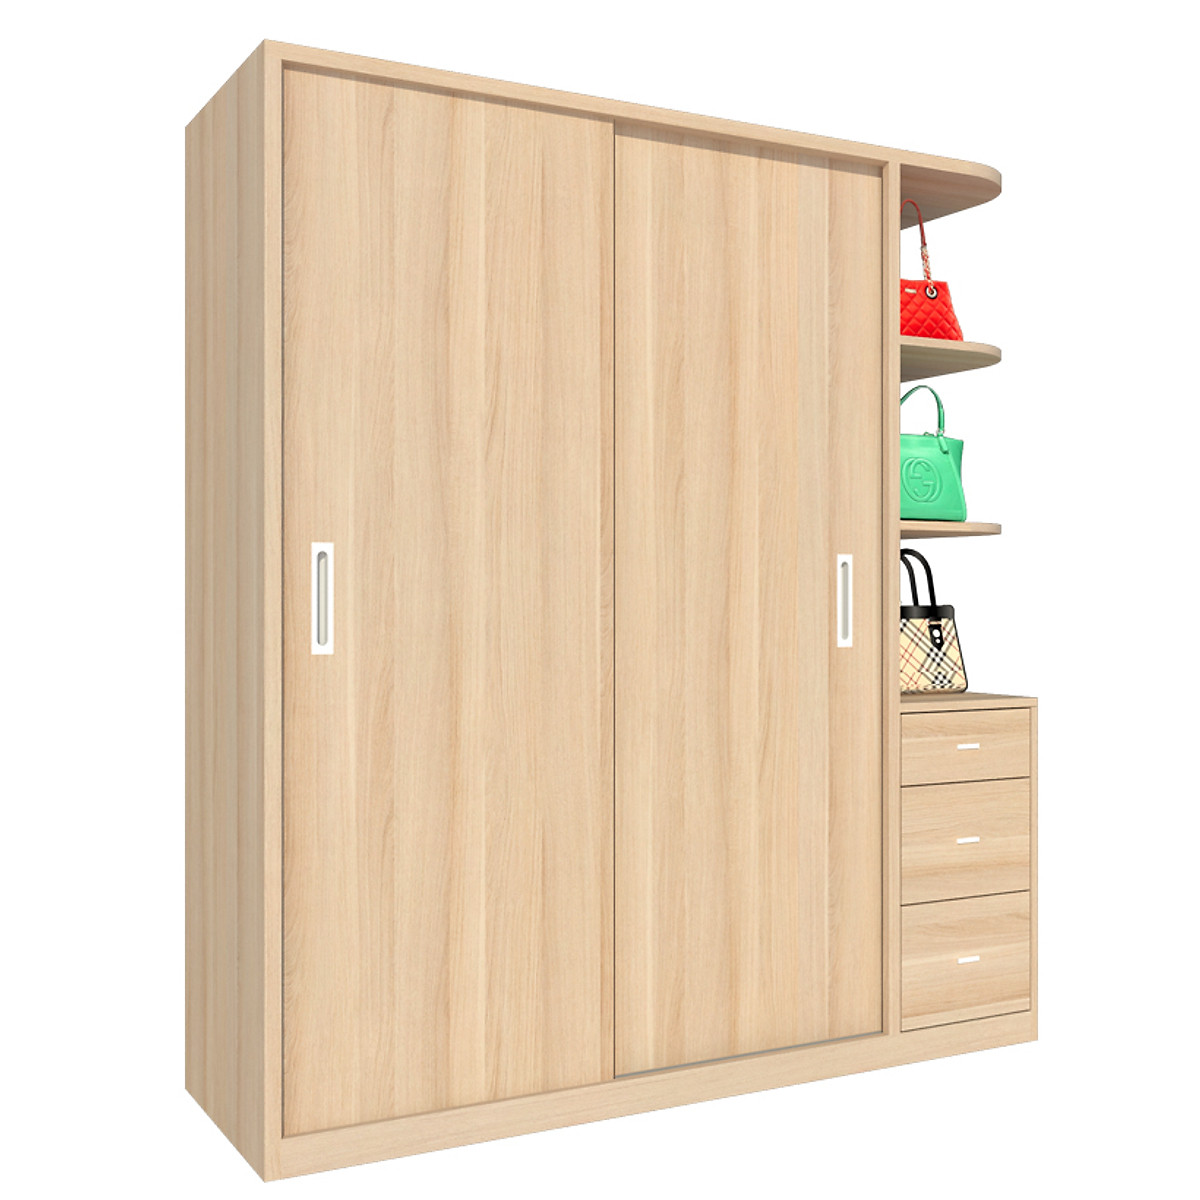 Tủ quần áo gỗ MDF Tundo cửa lùa màu sồi nhạt 180 x 55 x 200cm